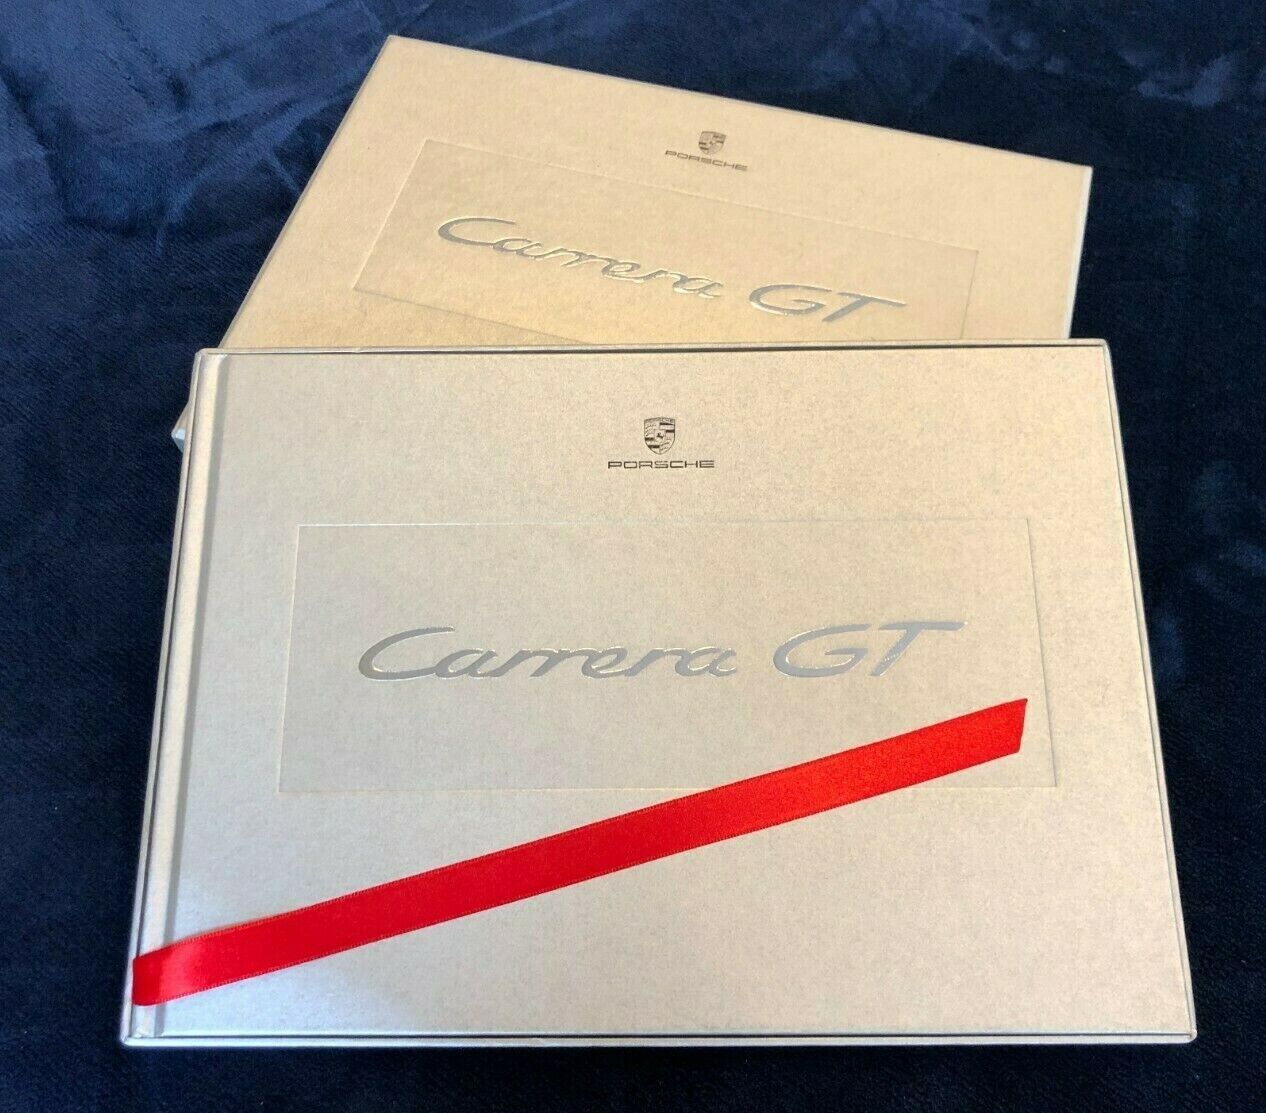 Porsche Carrera GT Factory Hardback Brochure in Original Sealed Box 